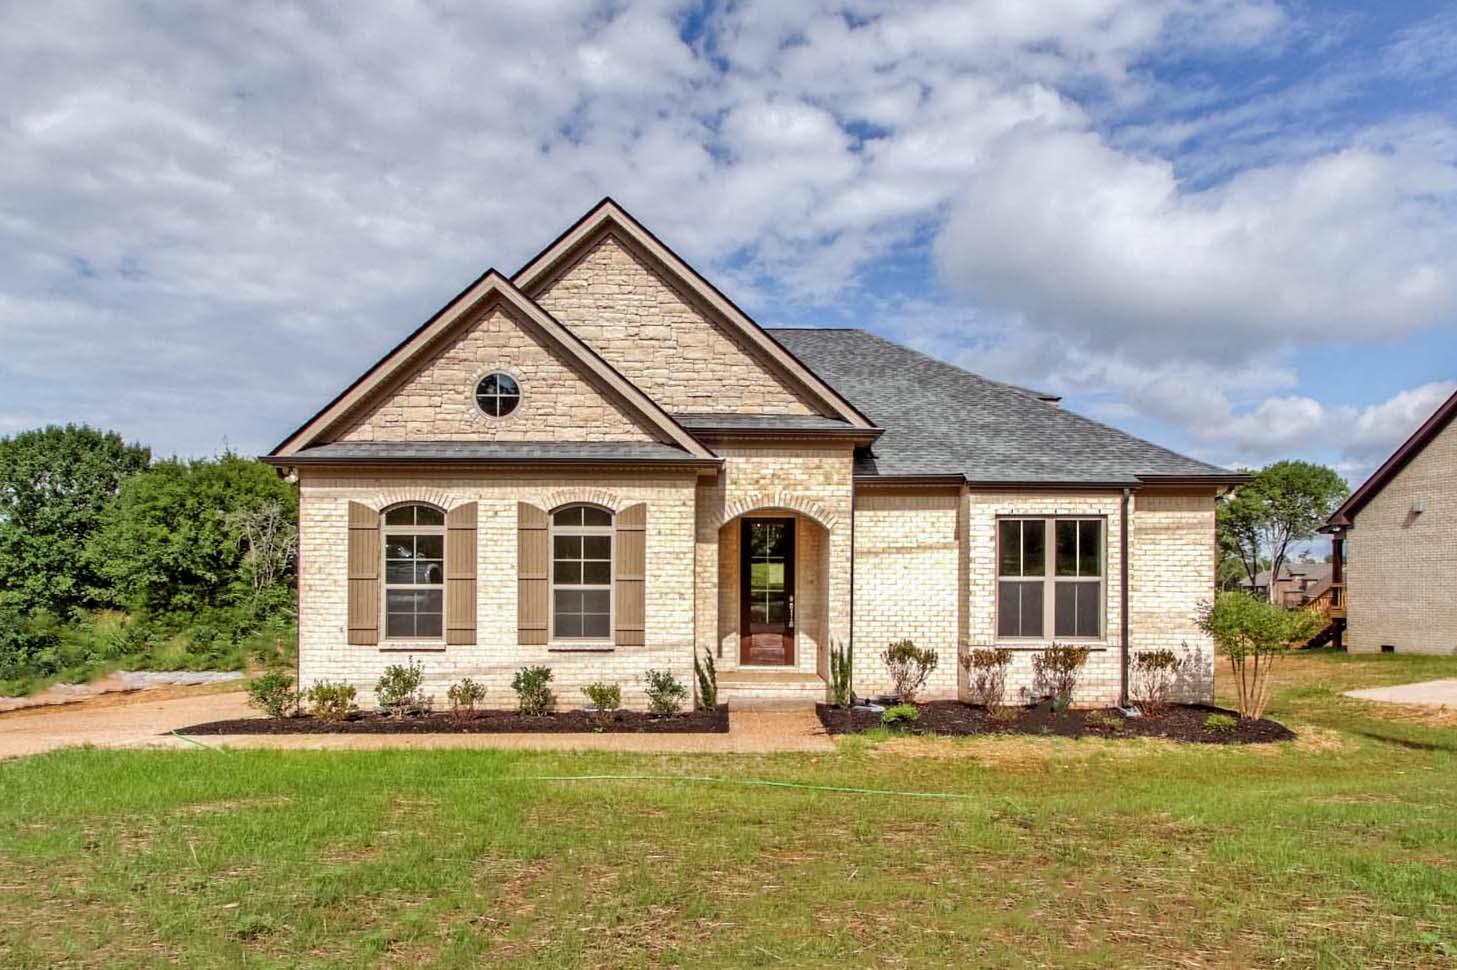 Pine Creek Estates Homes For Sale | Mount Juliet TN